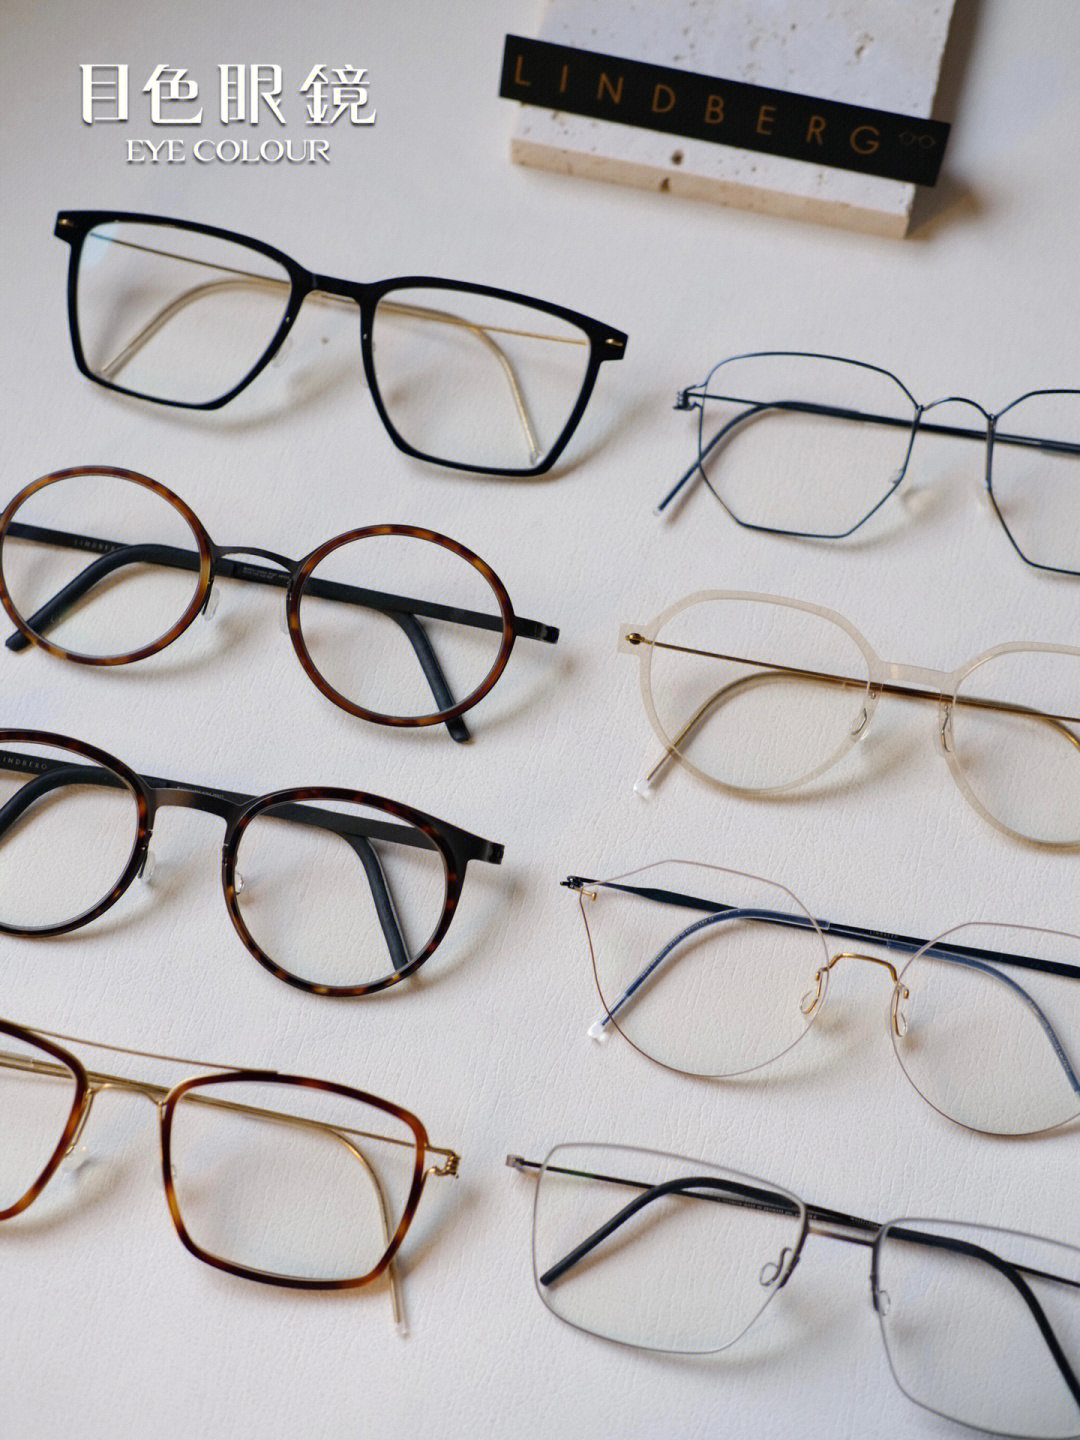 lindberg爆款眼镜合集你知道的有哪些呢